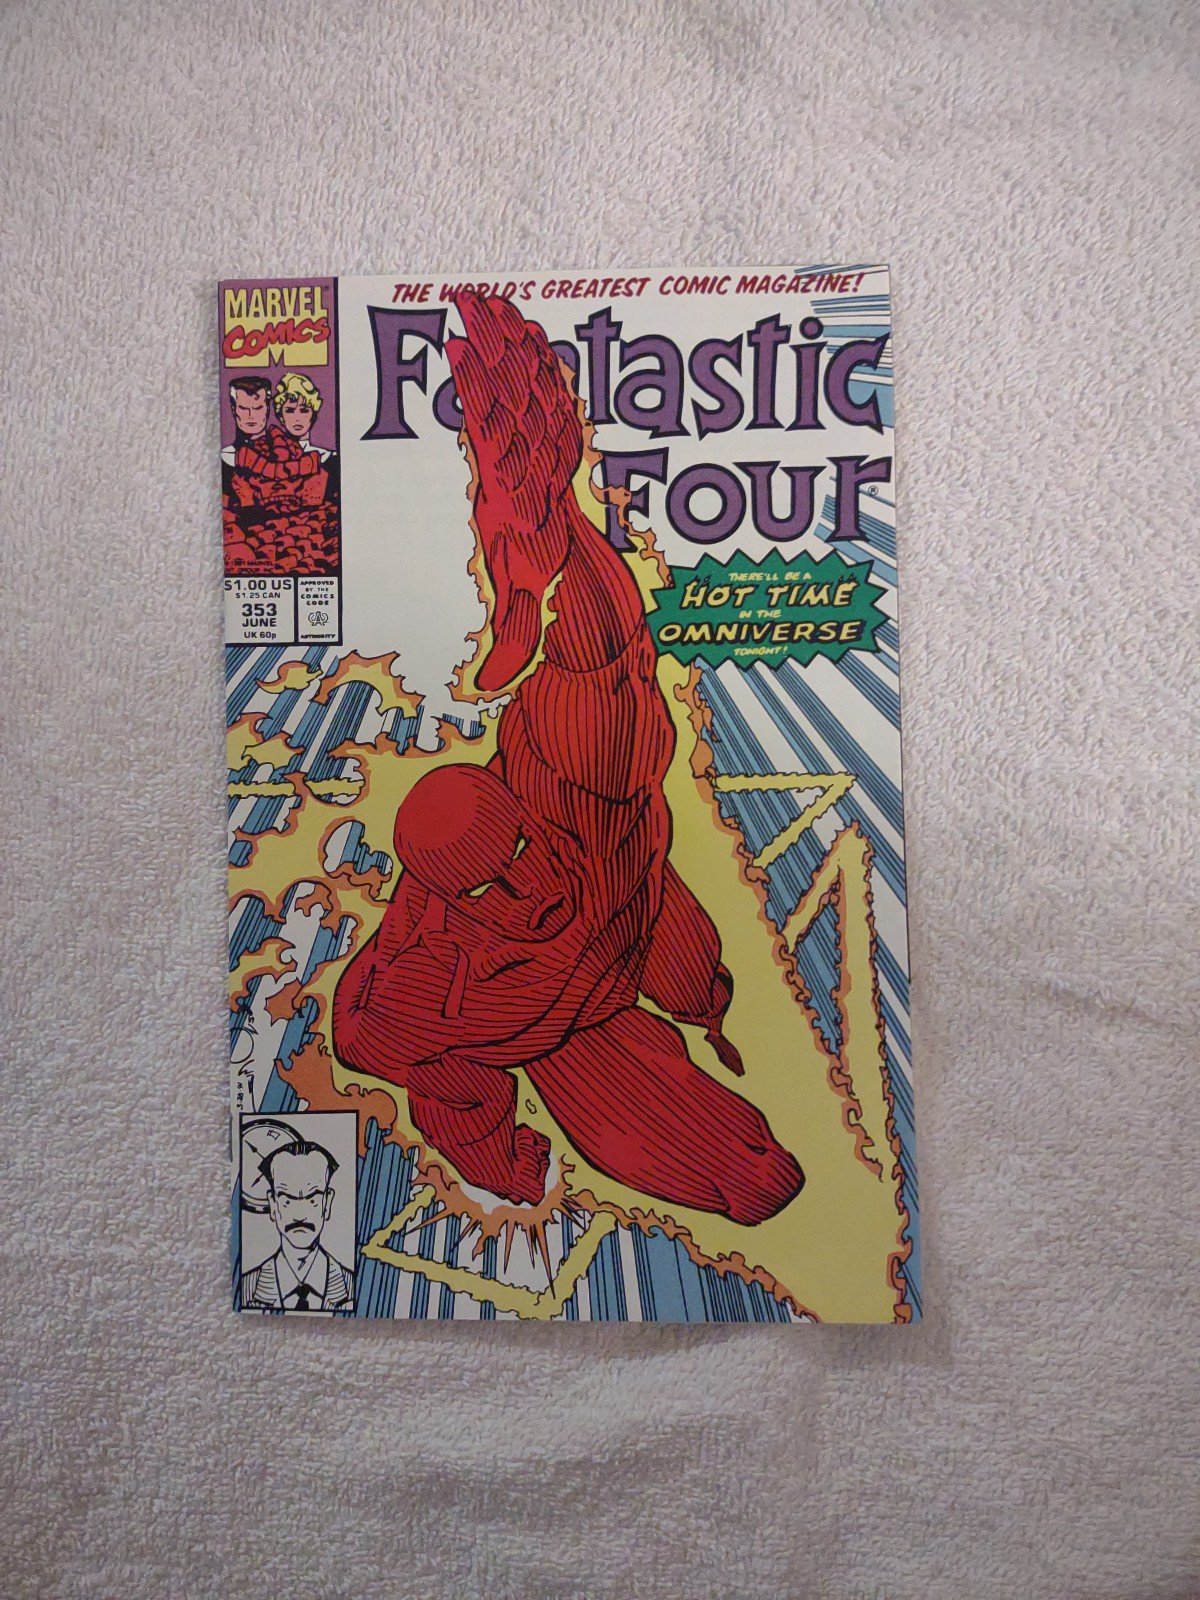 FANTASTIC FOUR #353 June 1991 1ST APPEARANCE OF MOBIUS Marvel FKPFa1e2p